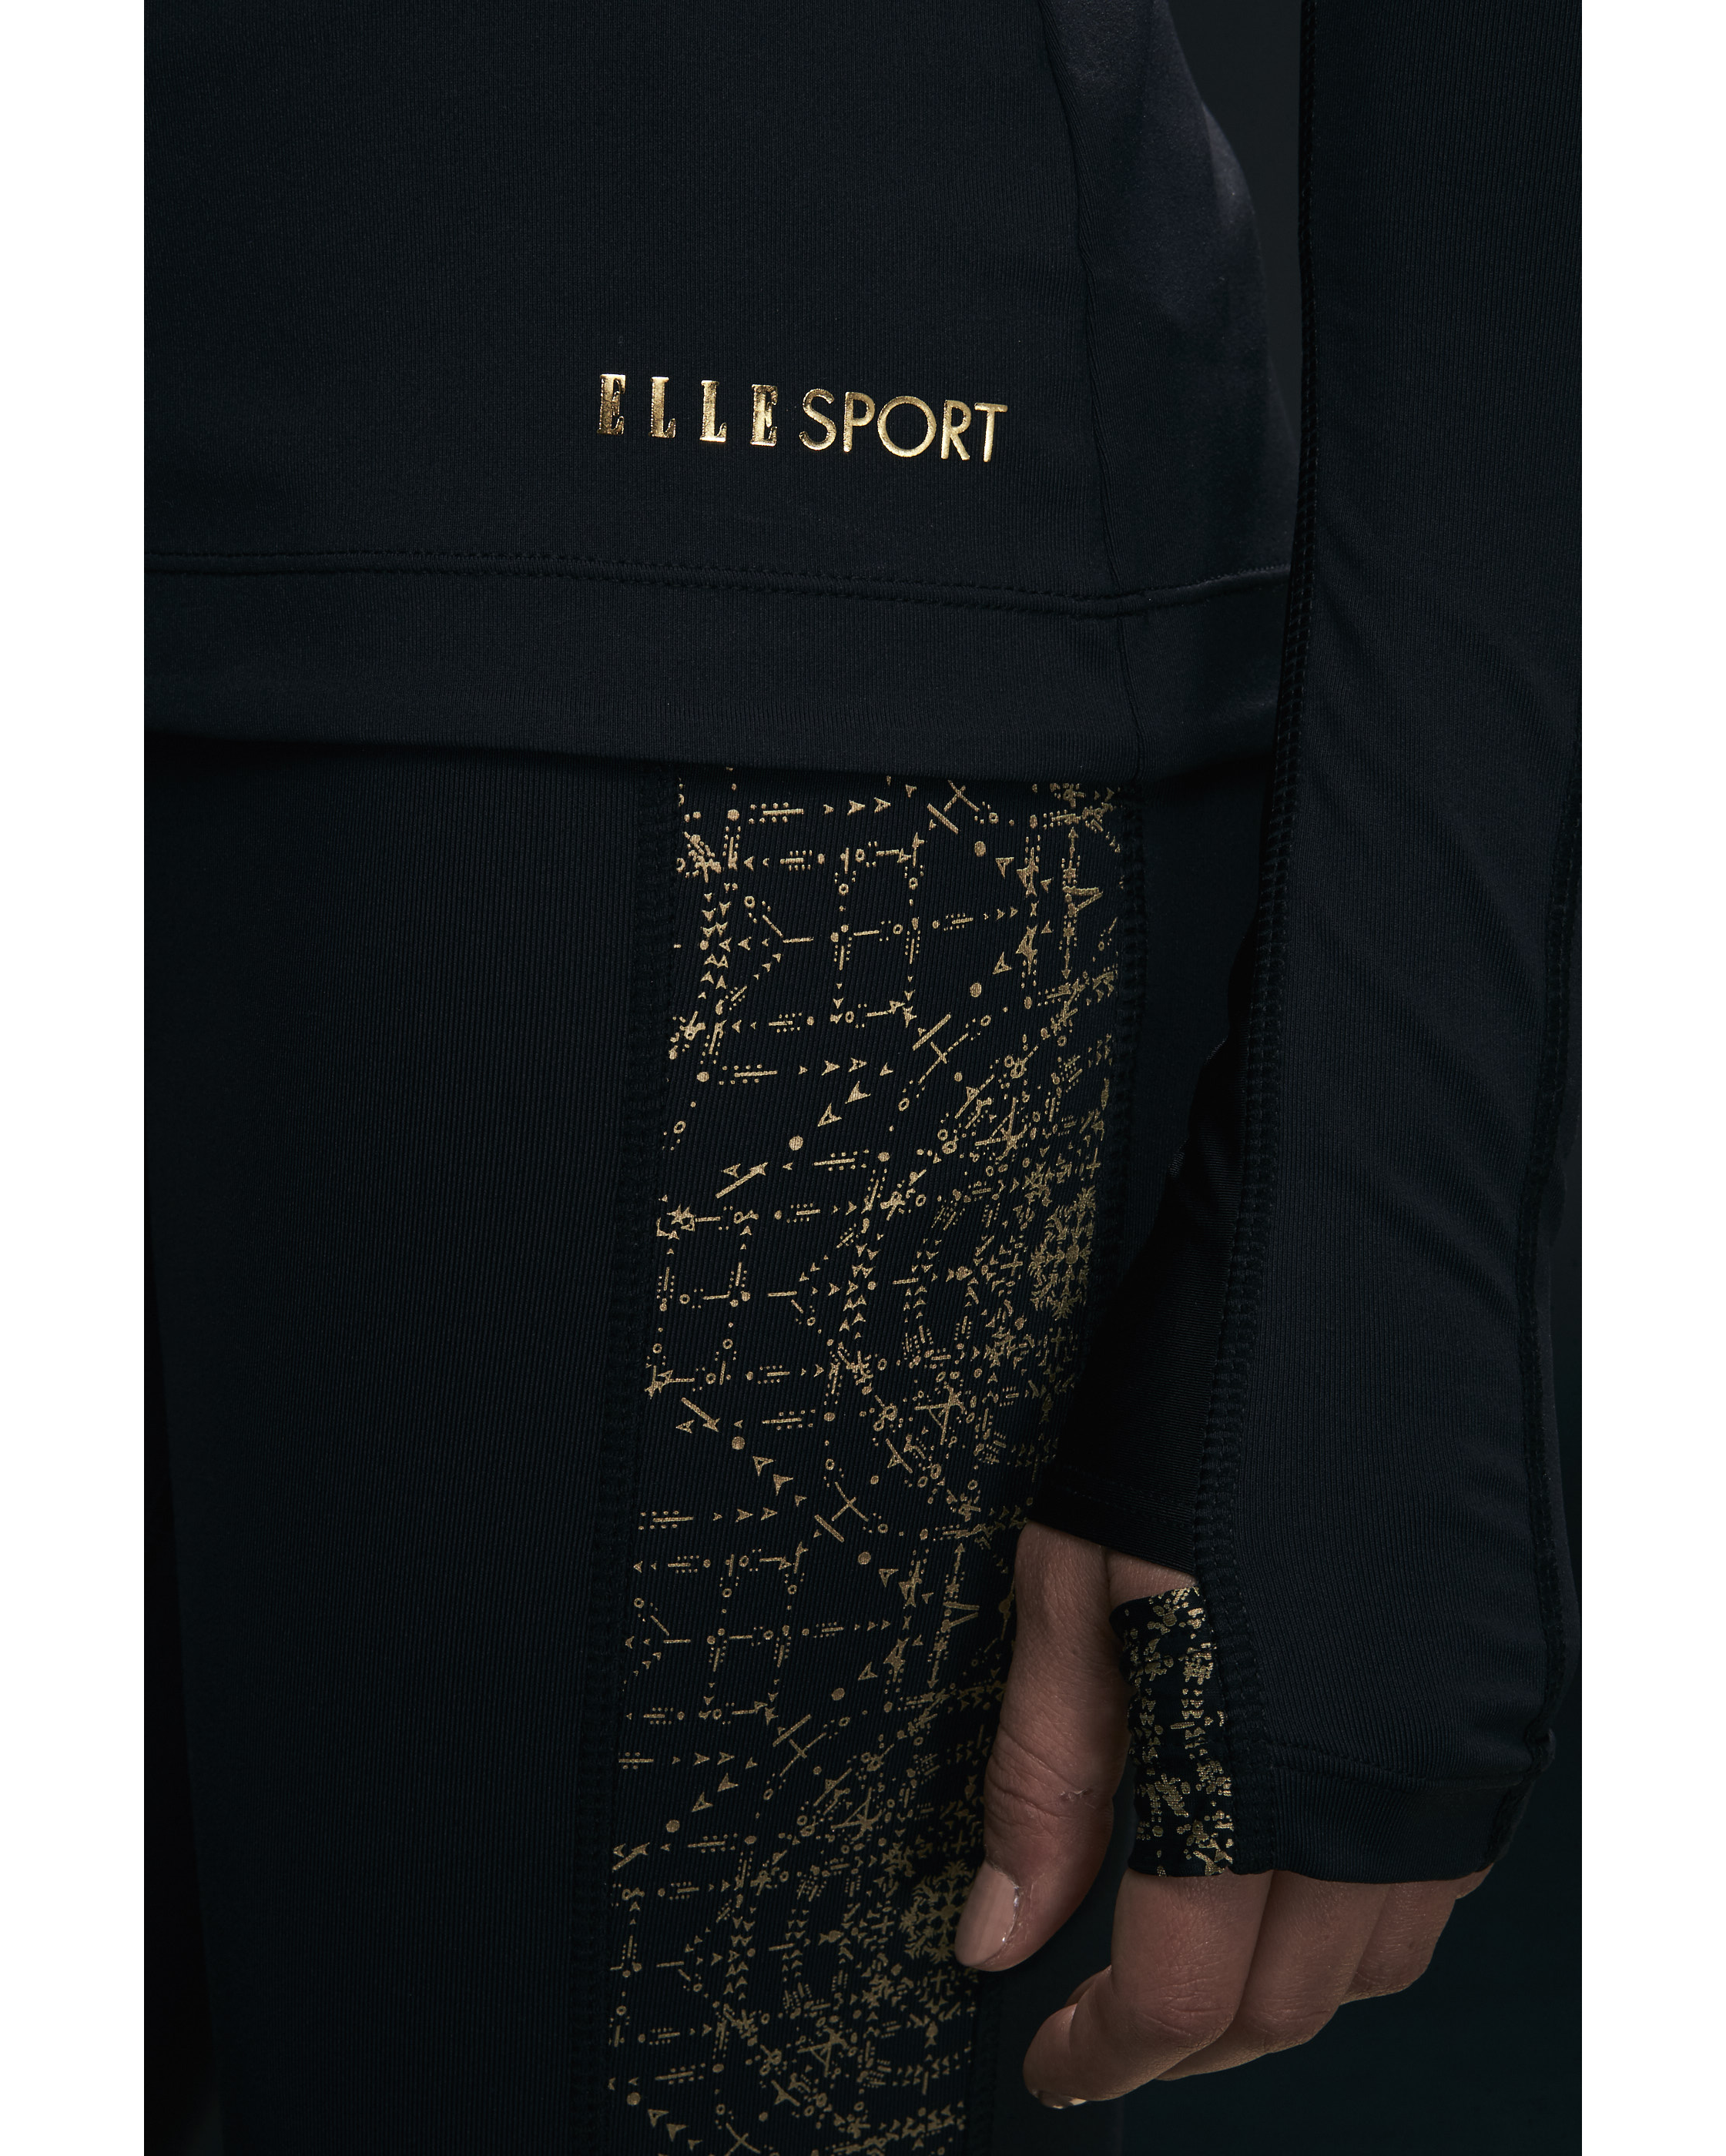 Ellesport Sleek Printed Panel Calf Length Capri – Black/Gold